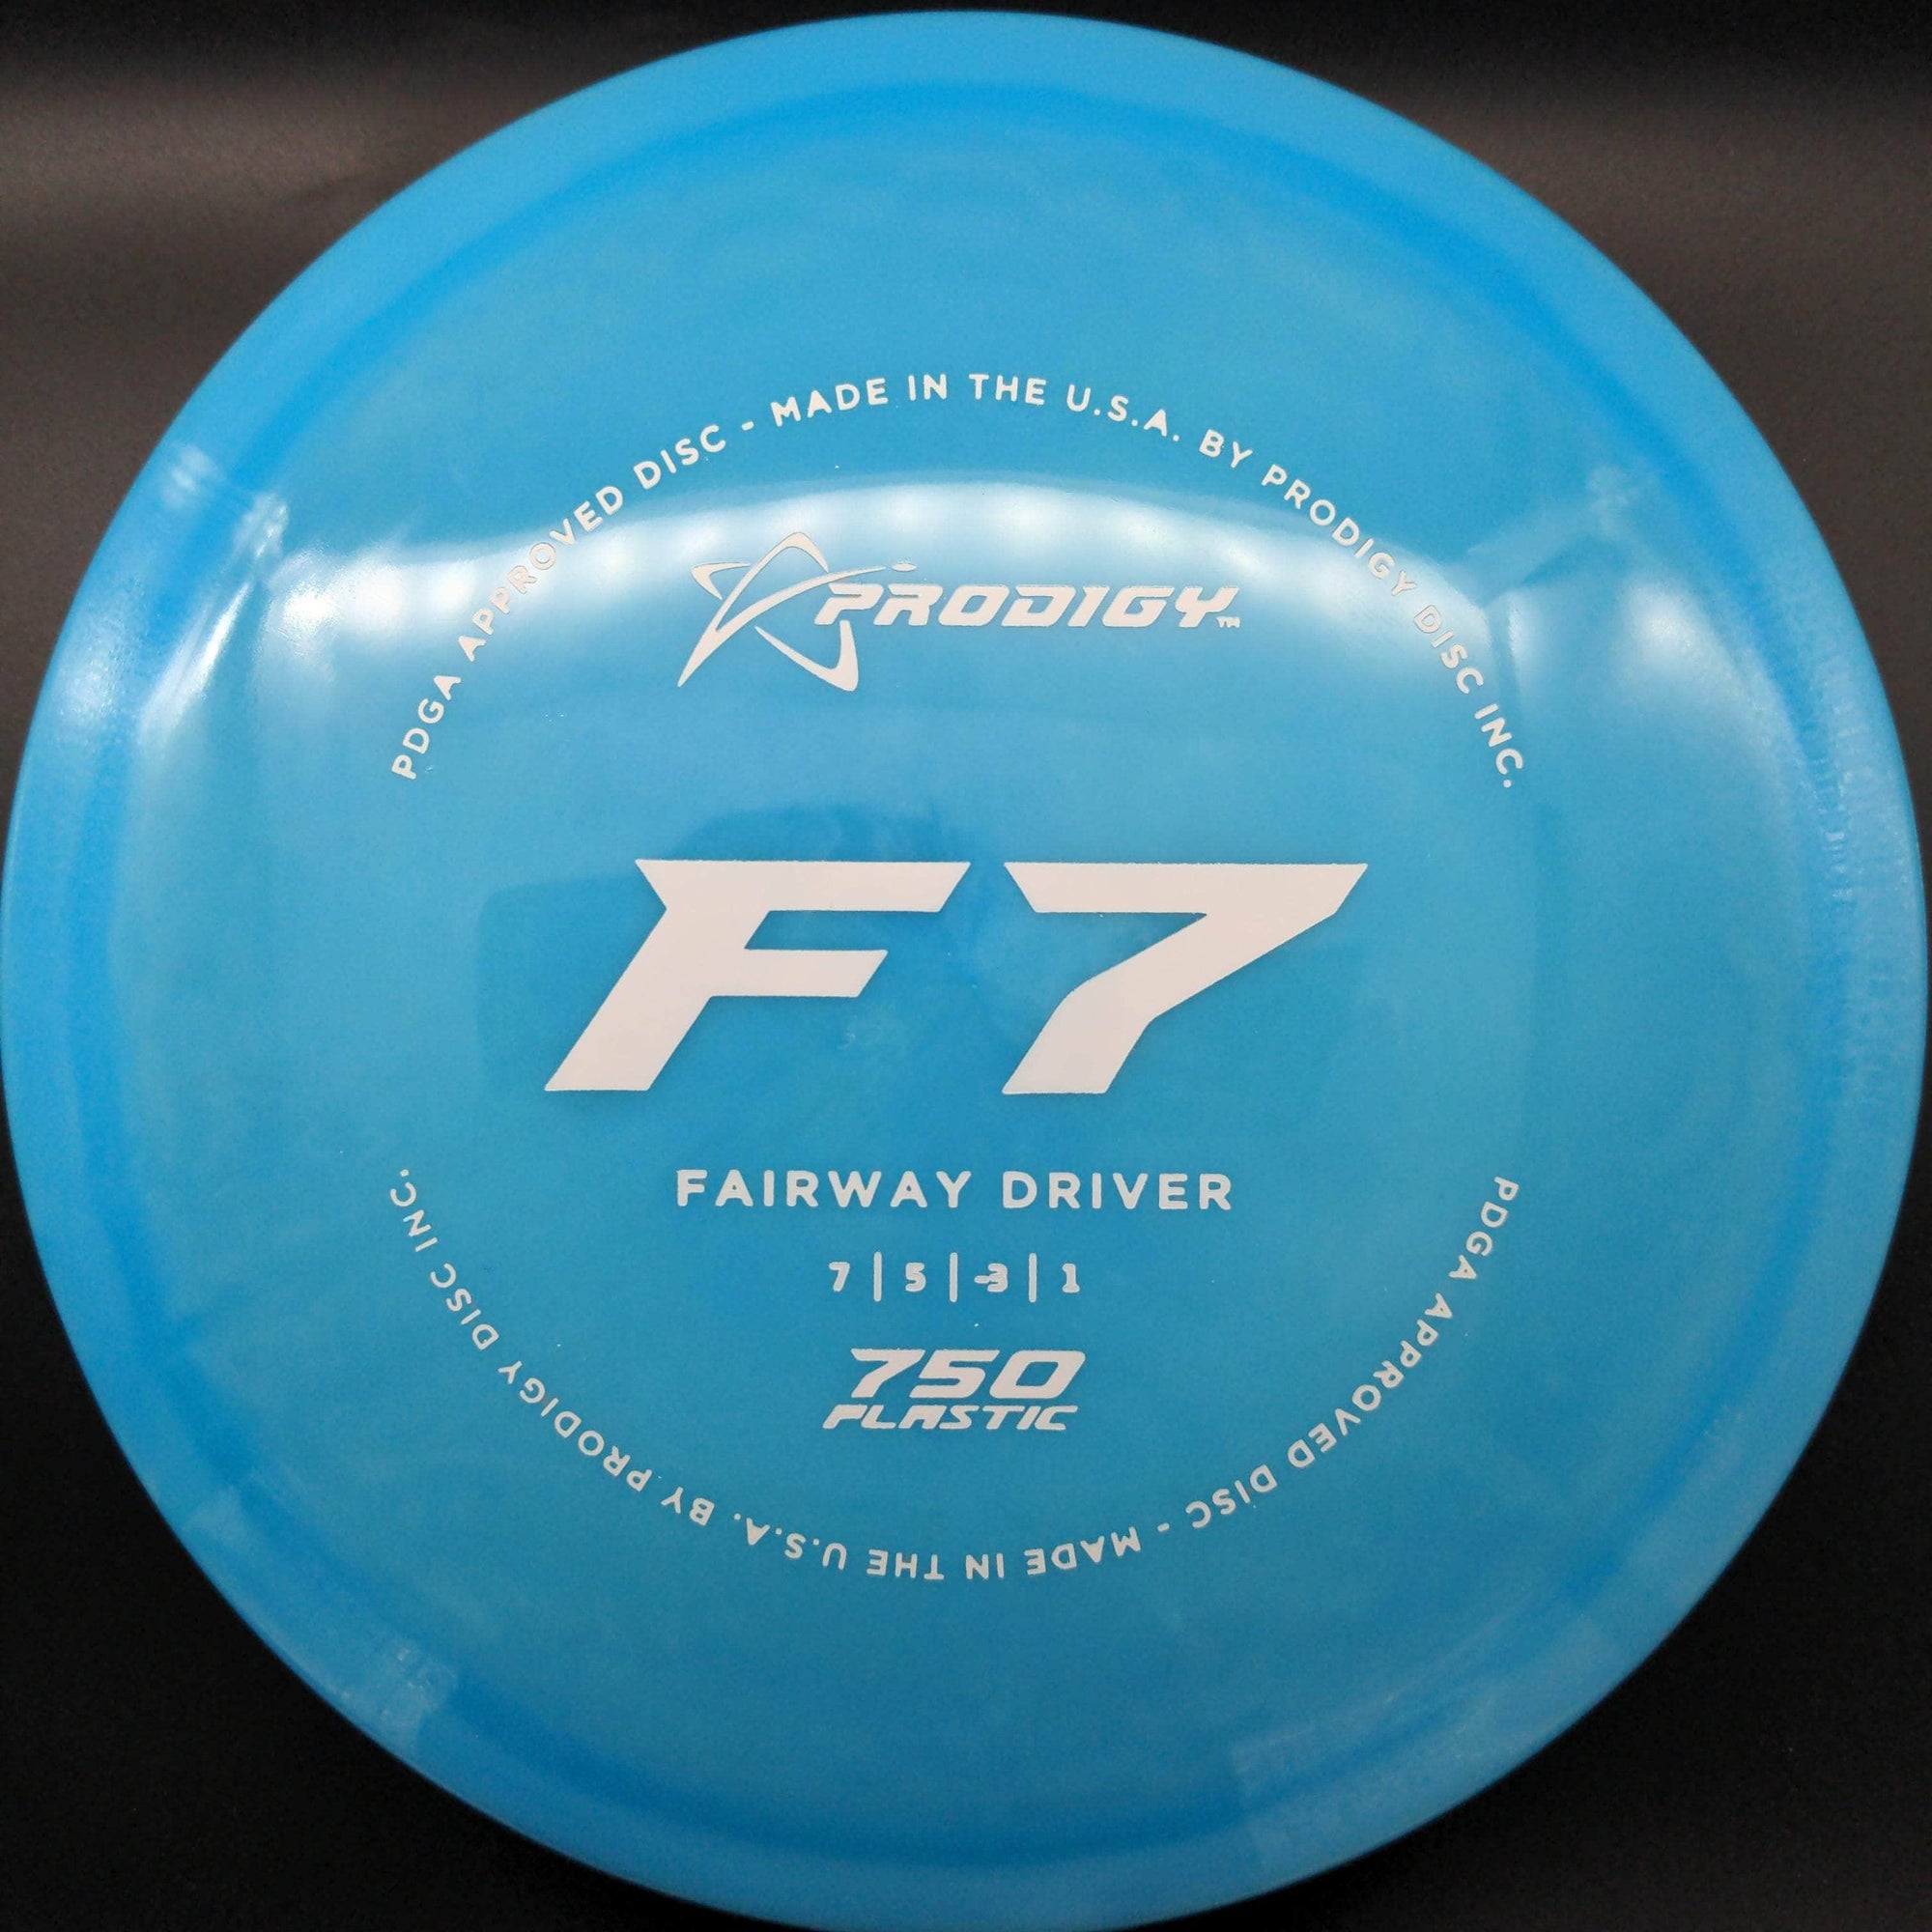 Prodigy Fairway Driver Blue White Stamp 172g F7 750 Plastic